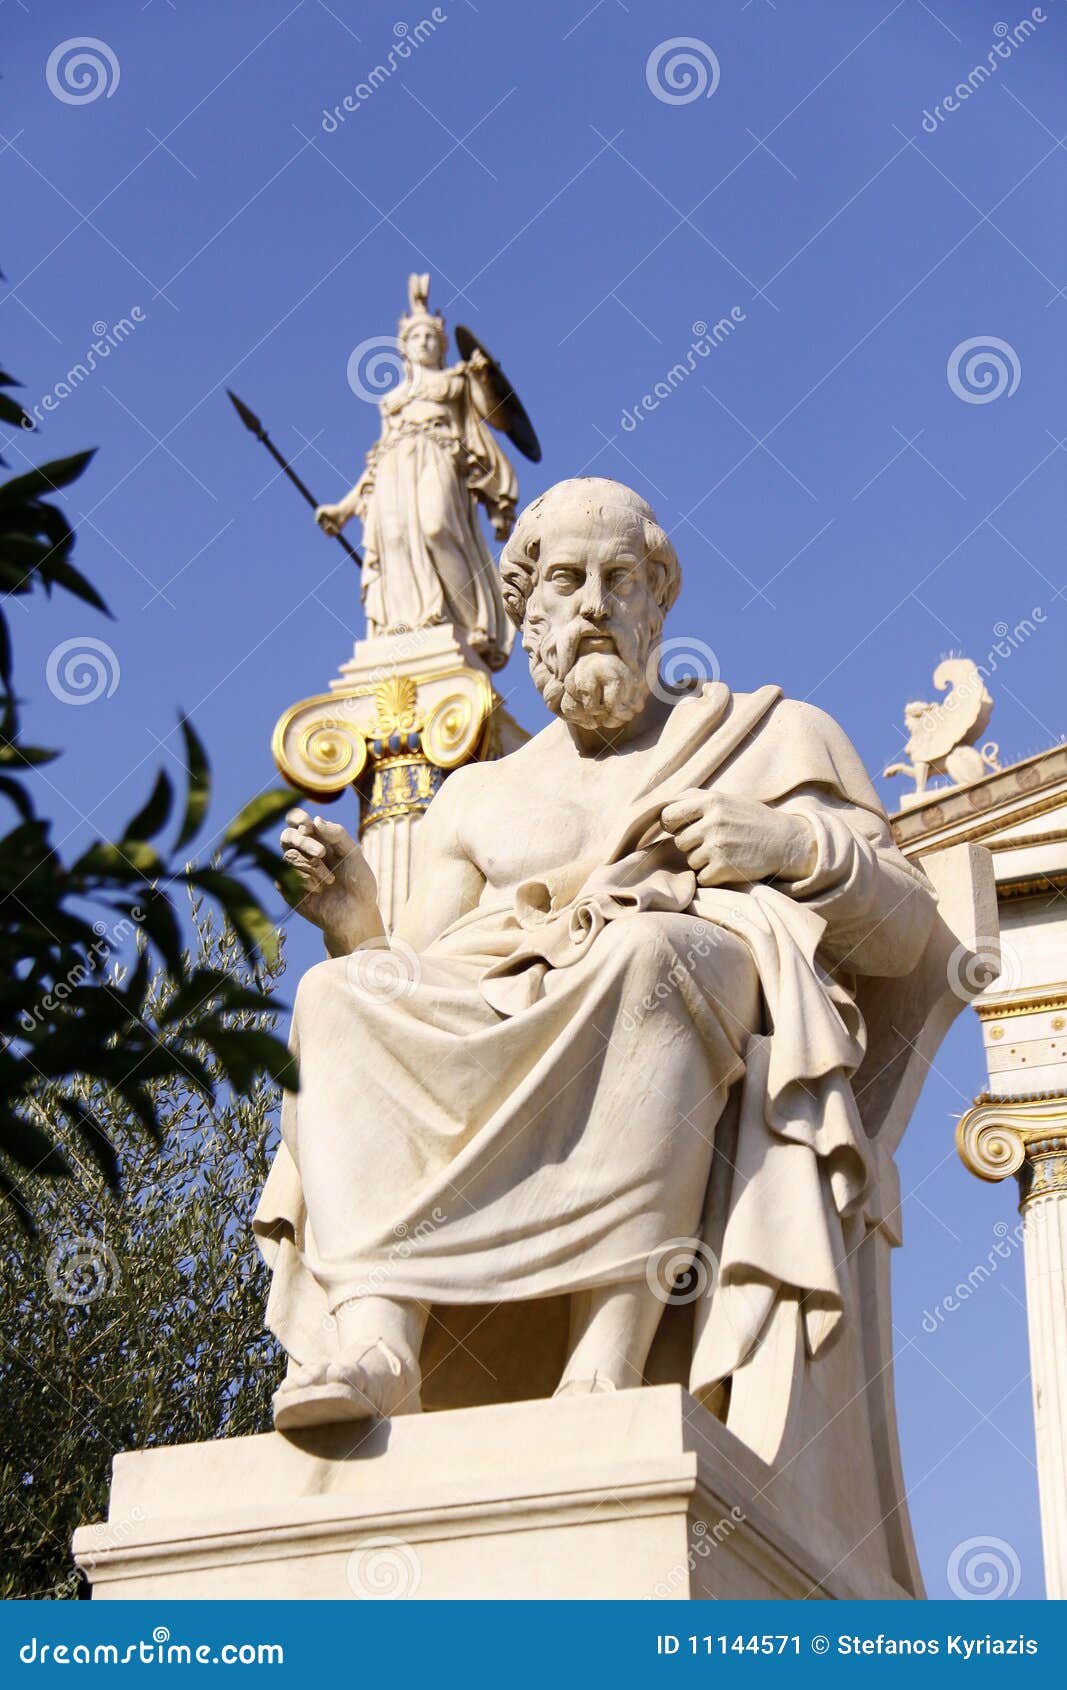 greek ancient philosopher platon